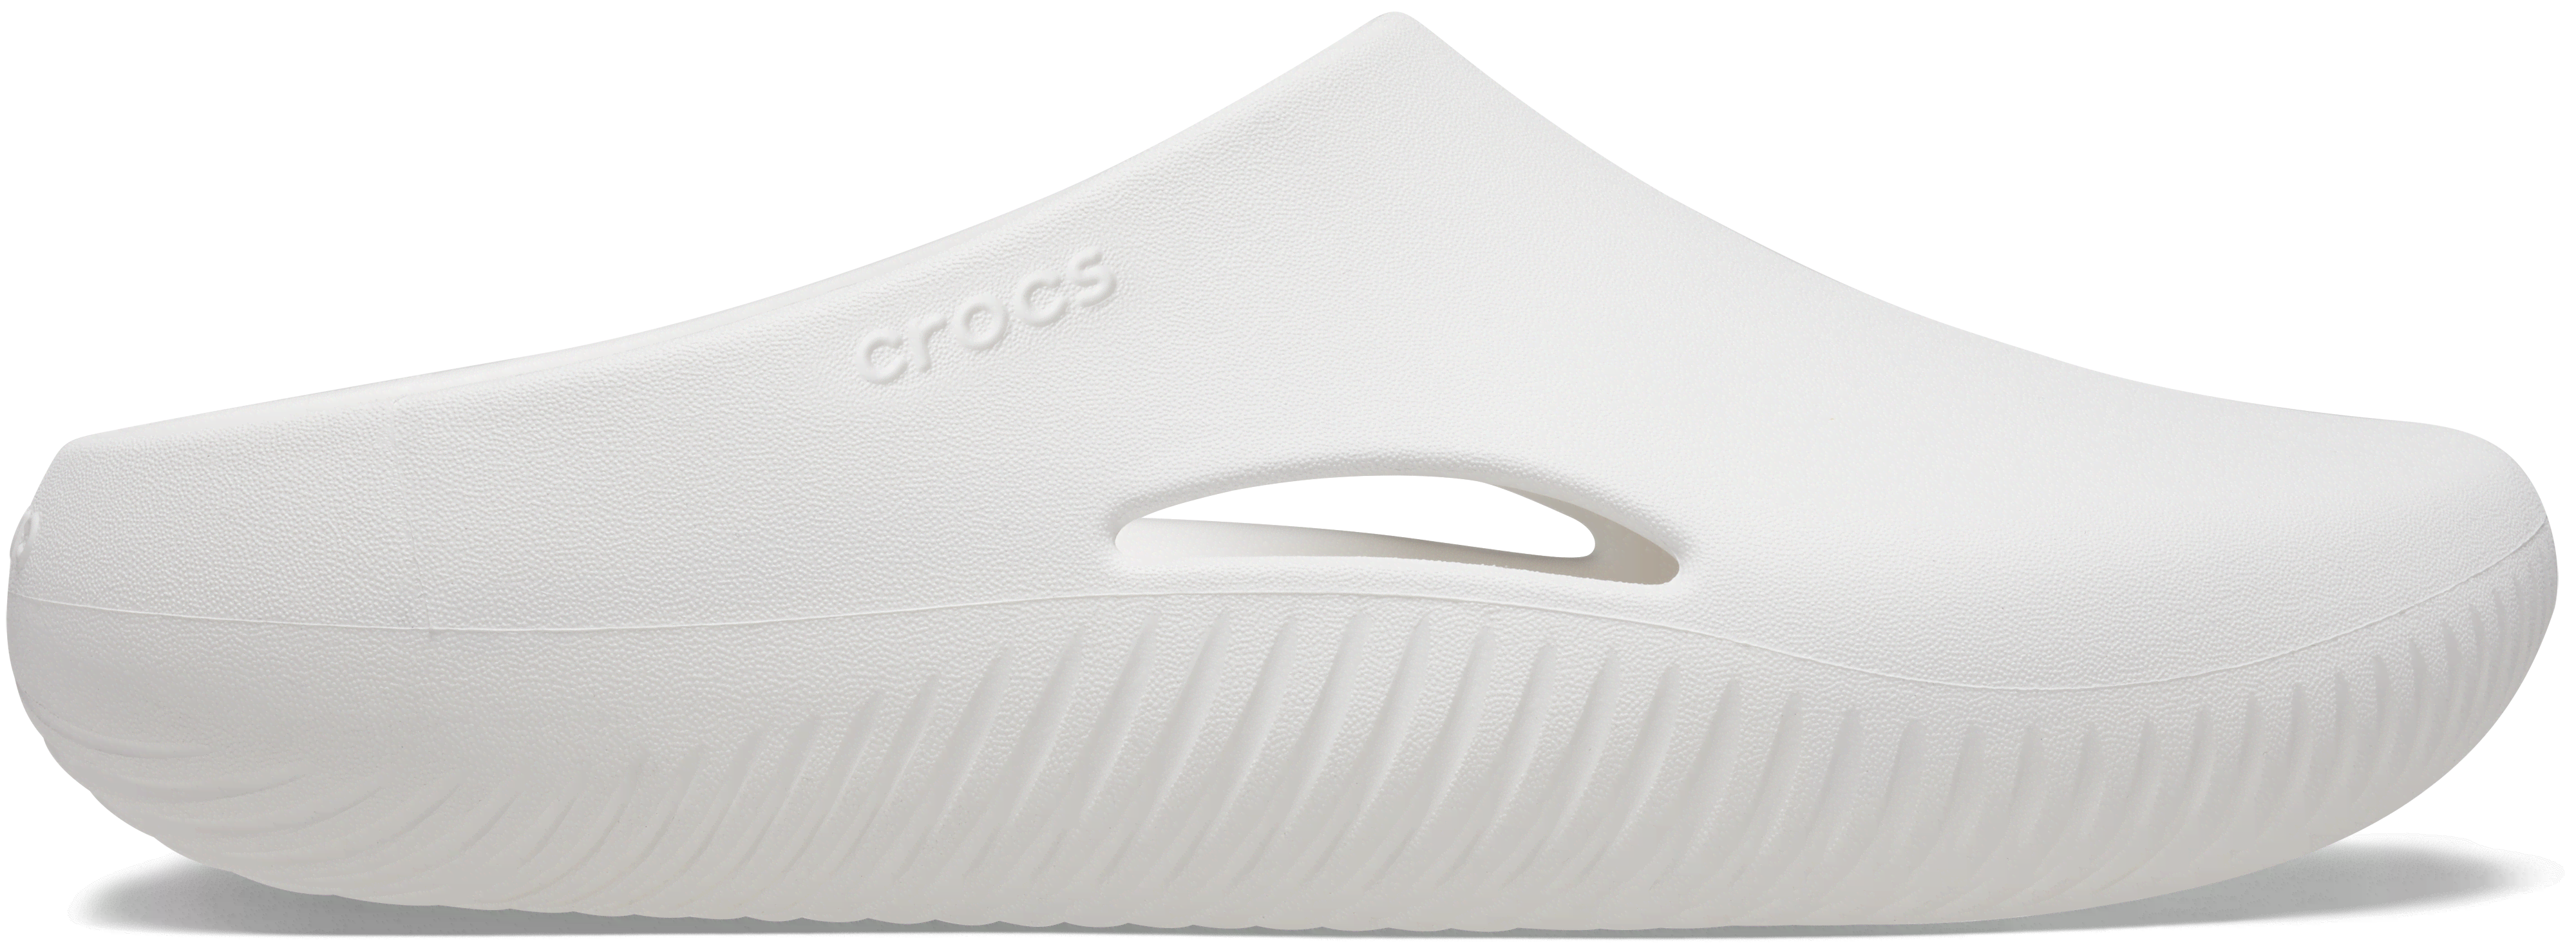 Crocs | Unisex | Mellow Recovery | Clogs | White | W7/M6